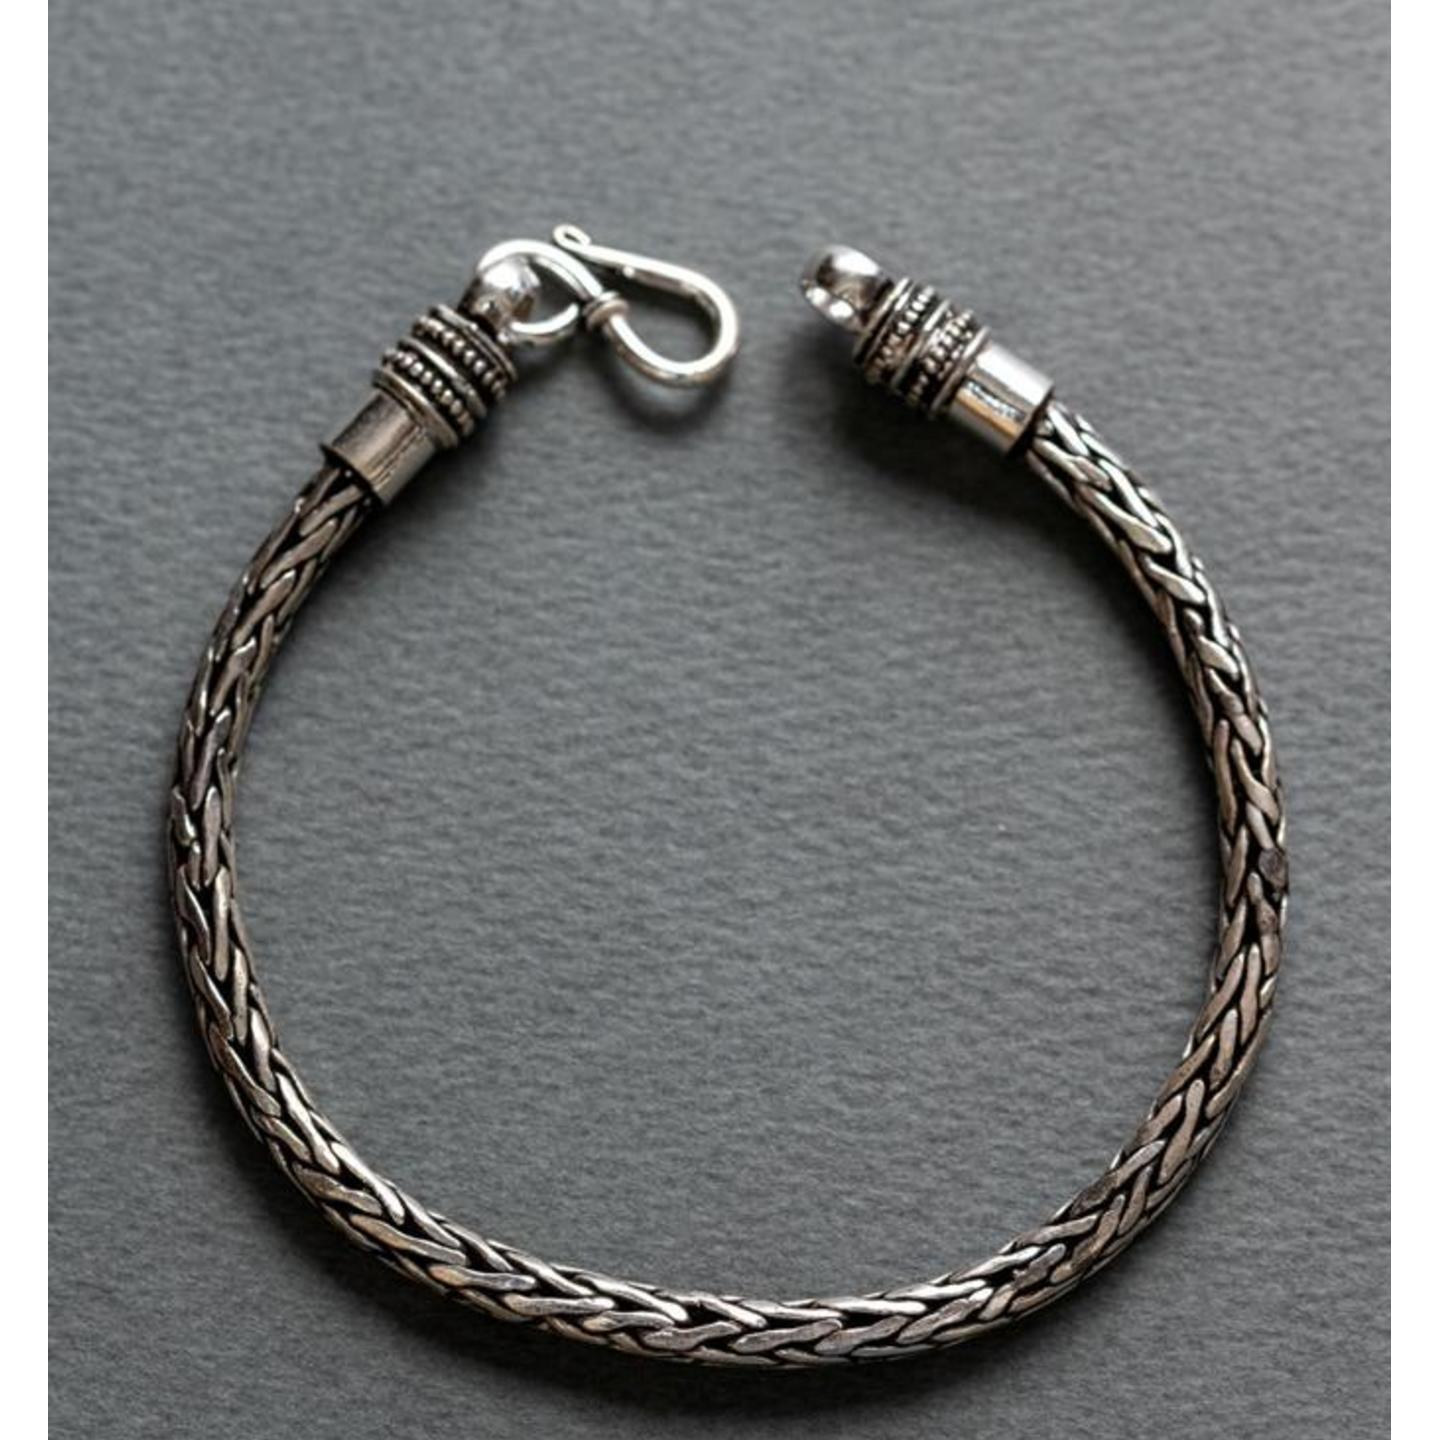 925 Solid Sterling Silver Handmade Bracelet - Length 8.25 Inches - Designer Mens Silver Bracelet - Oxidized Jewelry  34.2gm